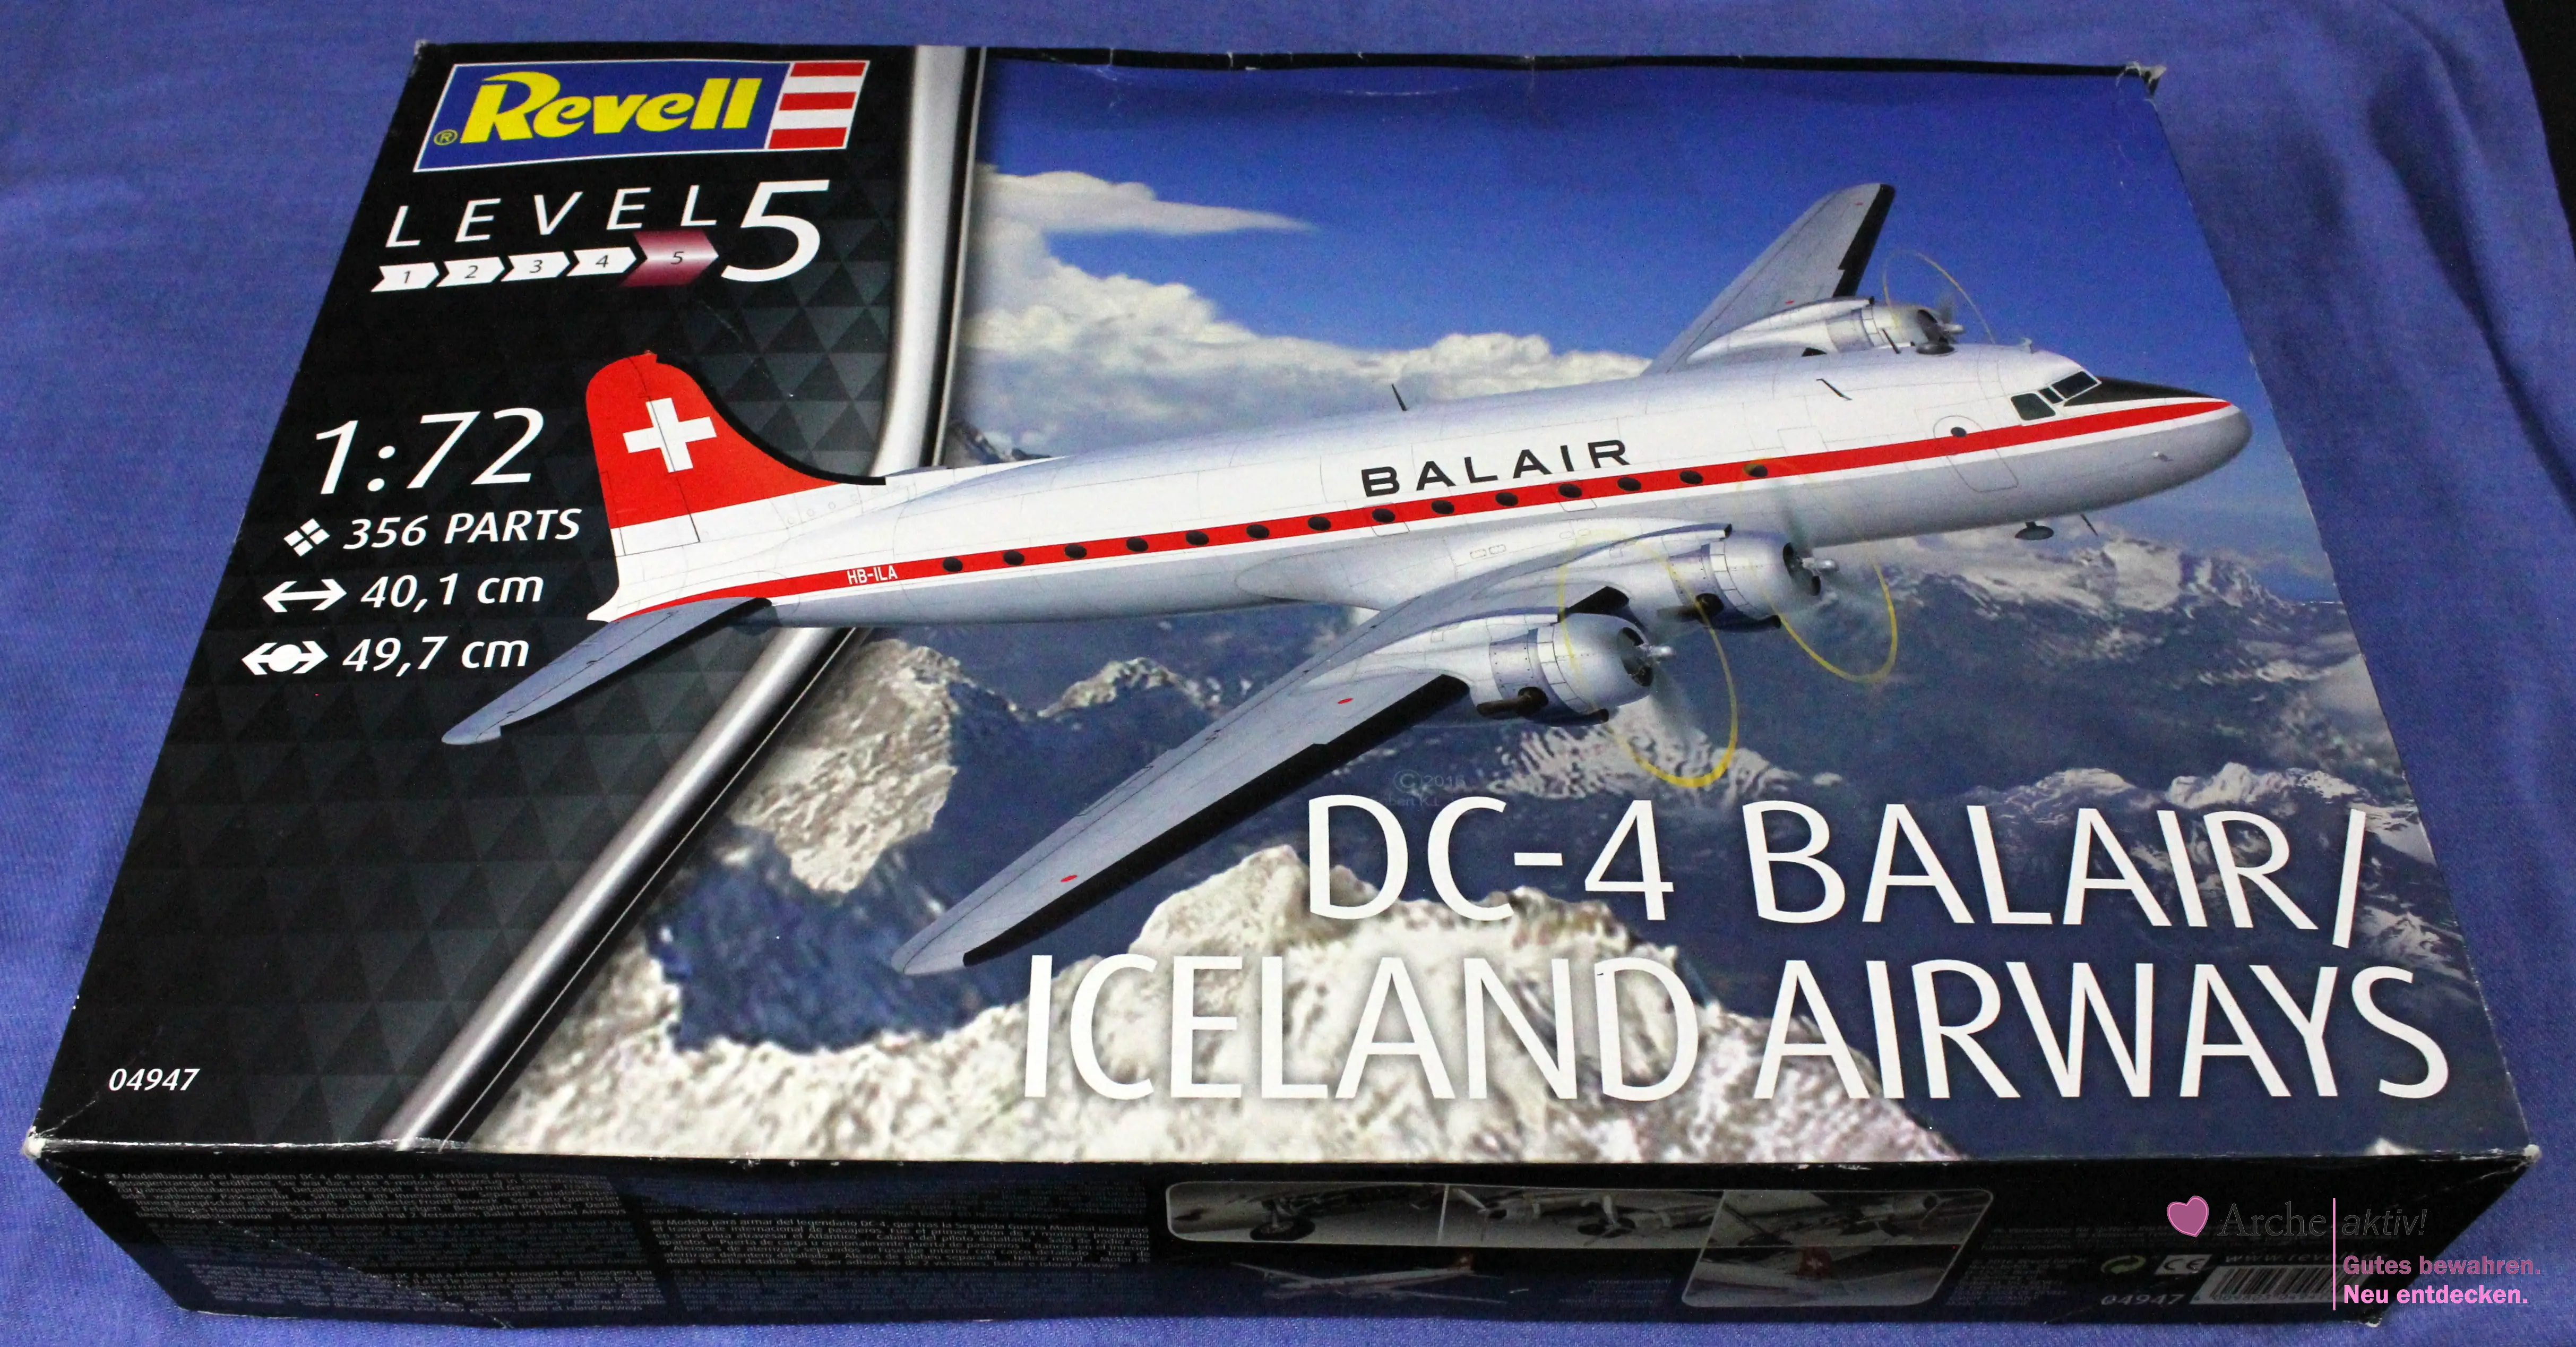 Revell 04947 - DC-4 Balair / Iceland Airways 1:72, Neu in OVP